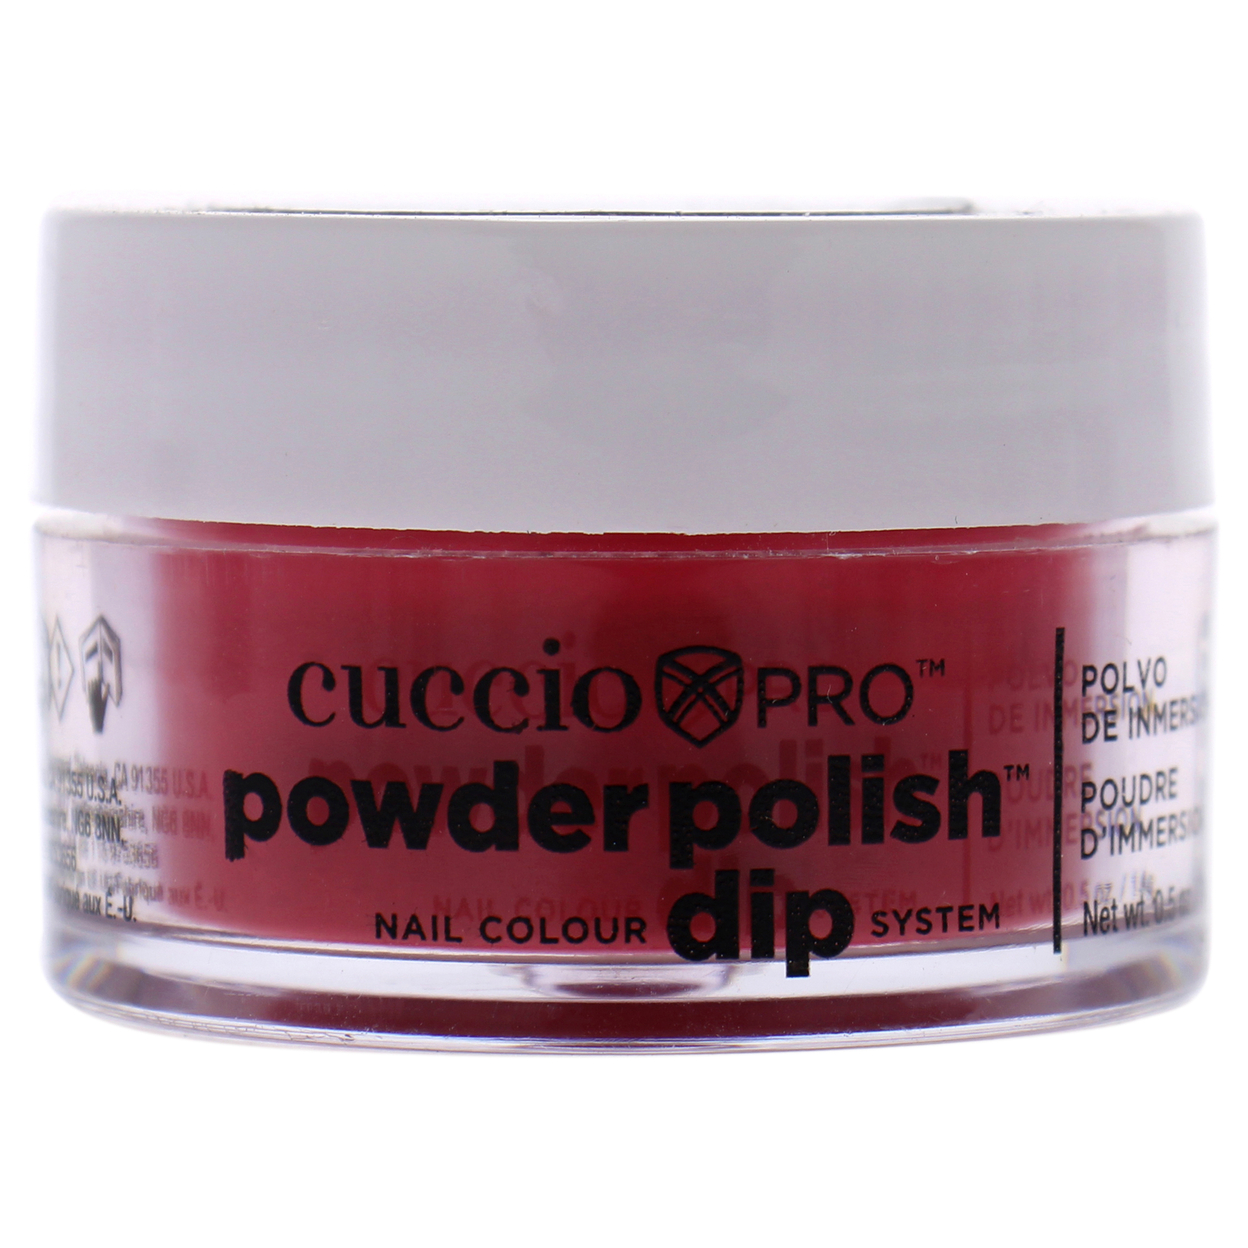 Cuccio Colour Pro Powder Polish Nail Colour Dip System - Candy Apple Red Nail Powder 0.5 Oz